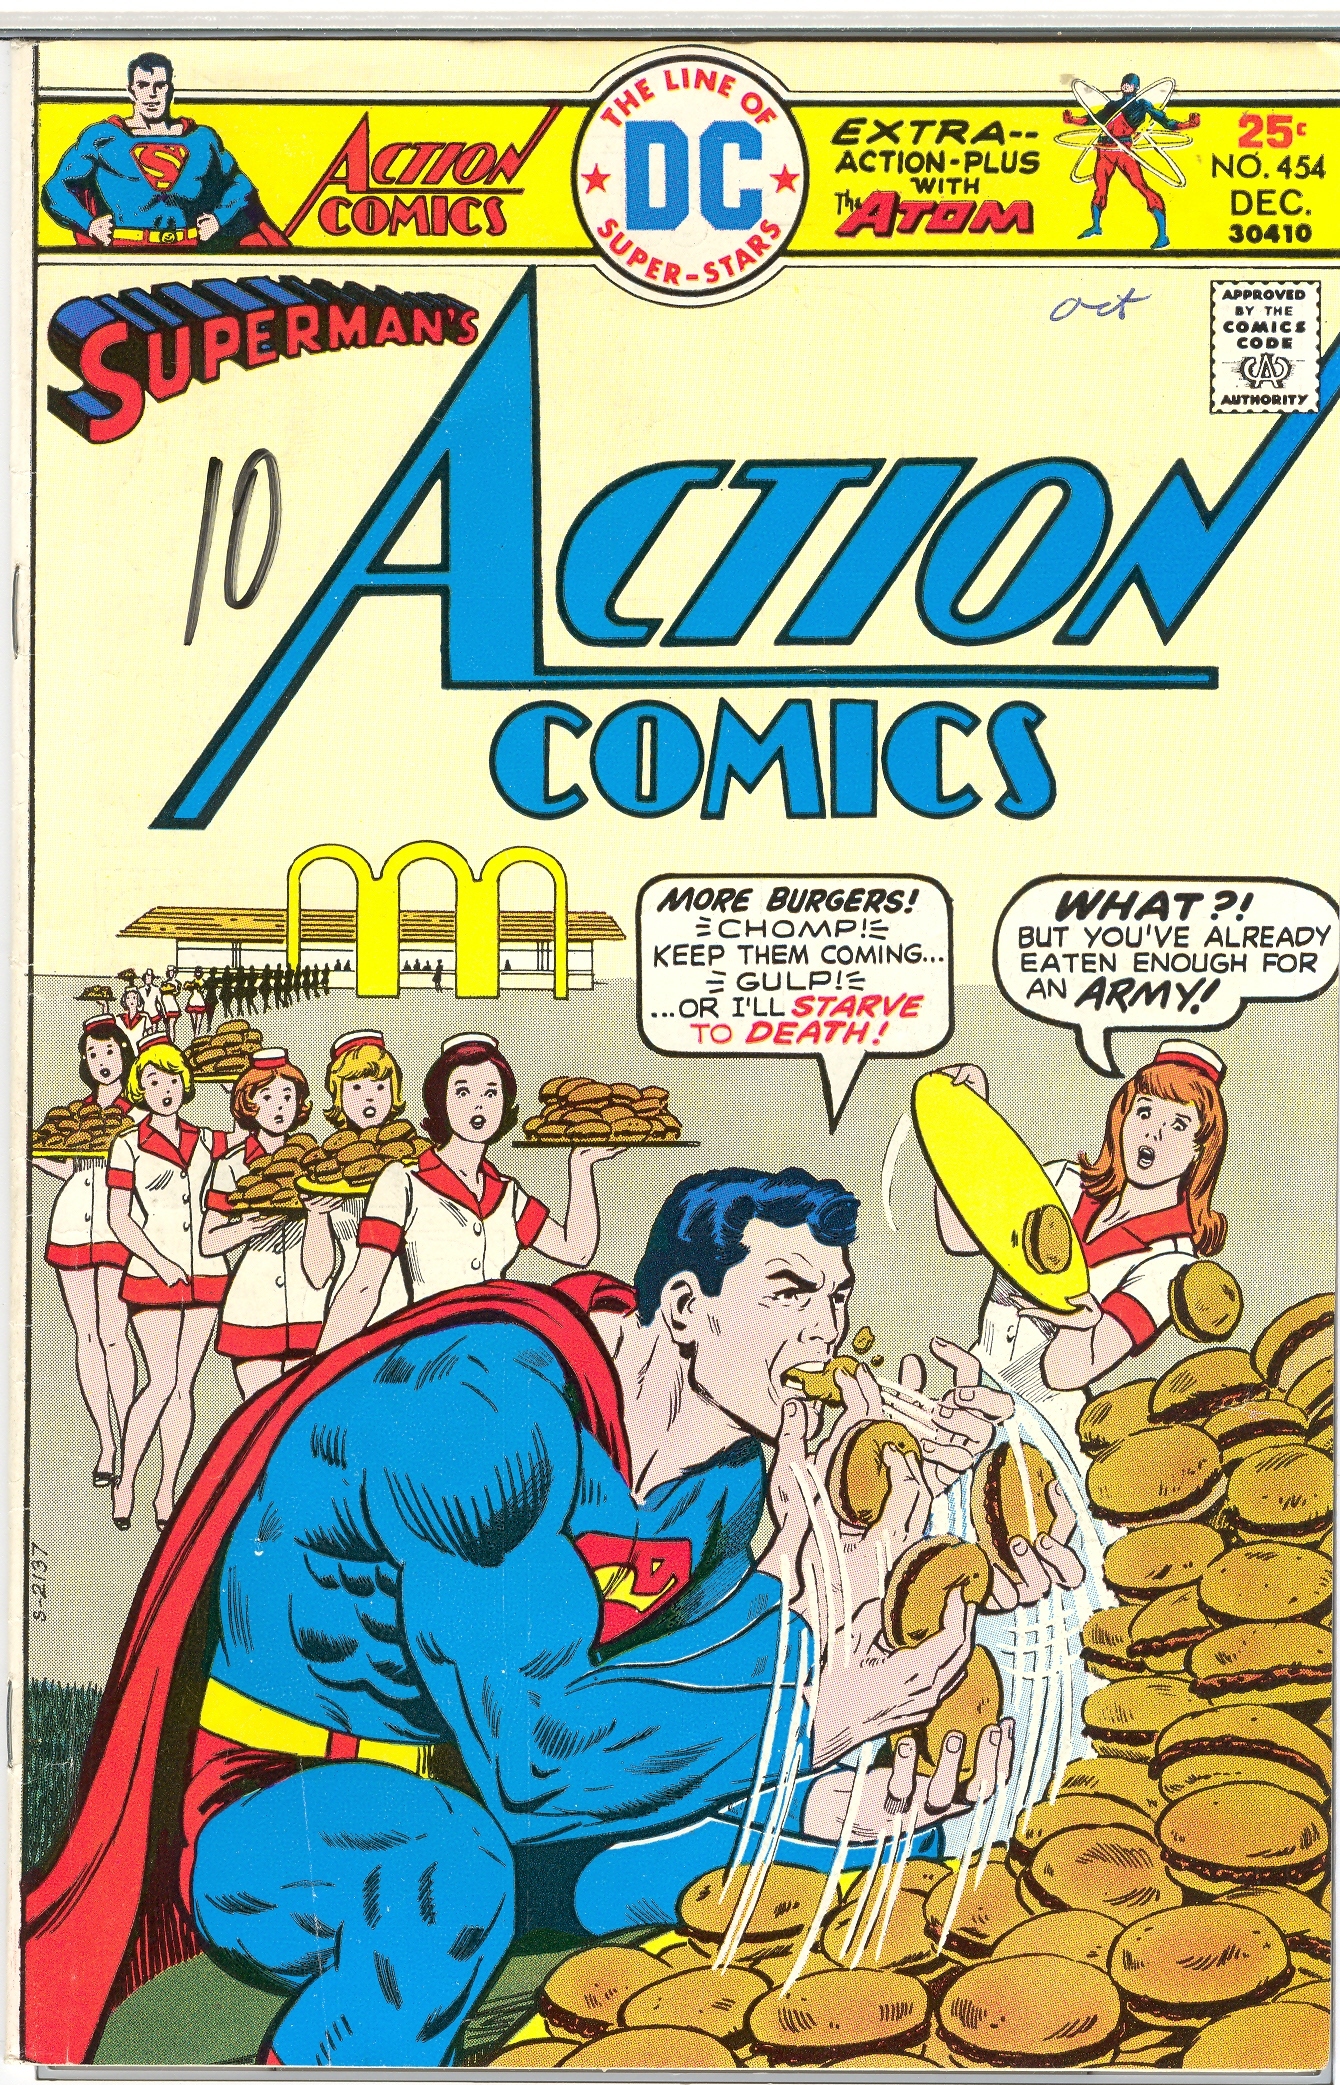 Crazy Comic Covers: Action Comics #454 "Superman's Energy Crisis" • Comic Book Daily